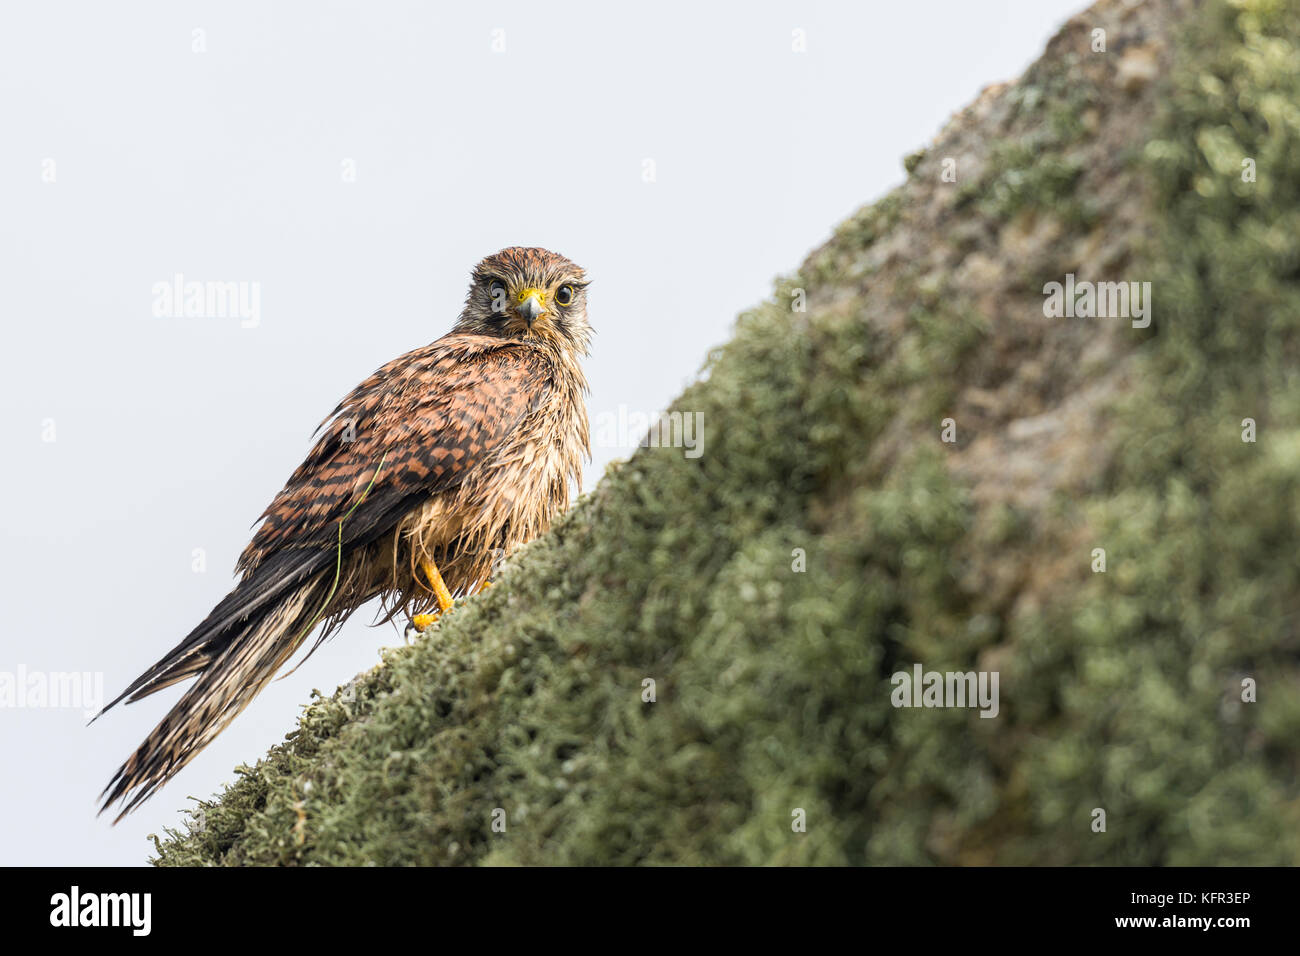 Kestrel (Falco tinnunculus) perched on a rock, eye contact - Cornwall, UK Stock Photo